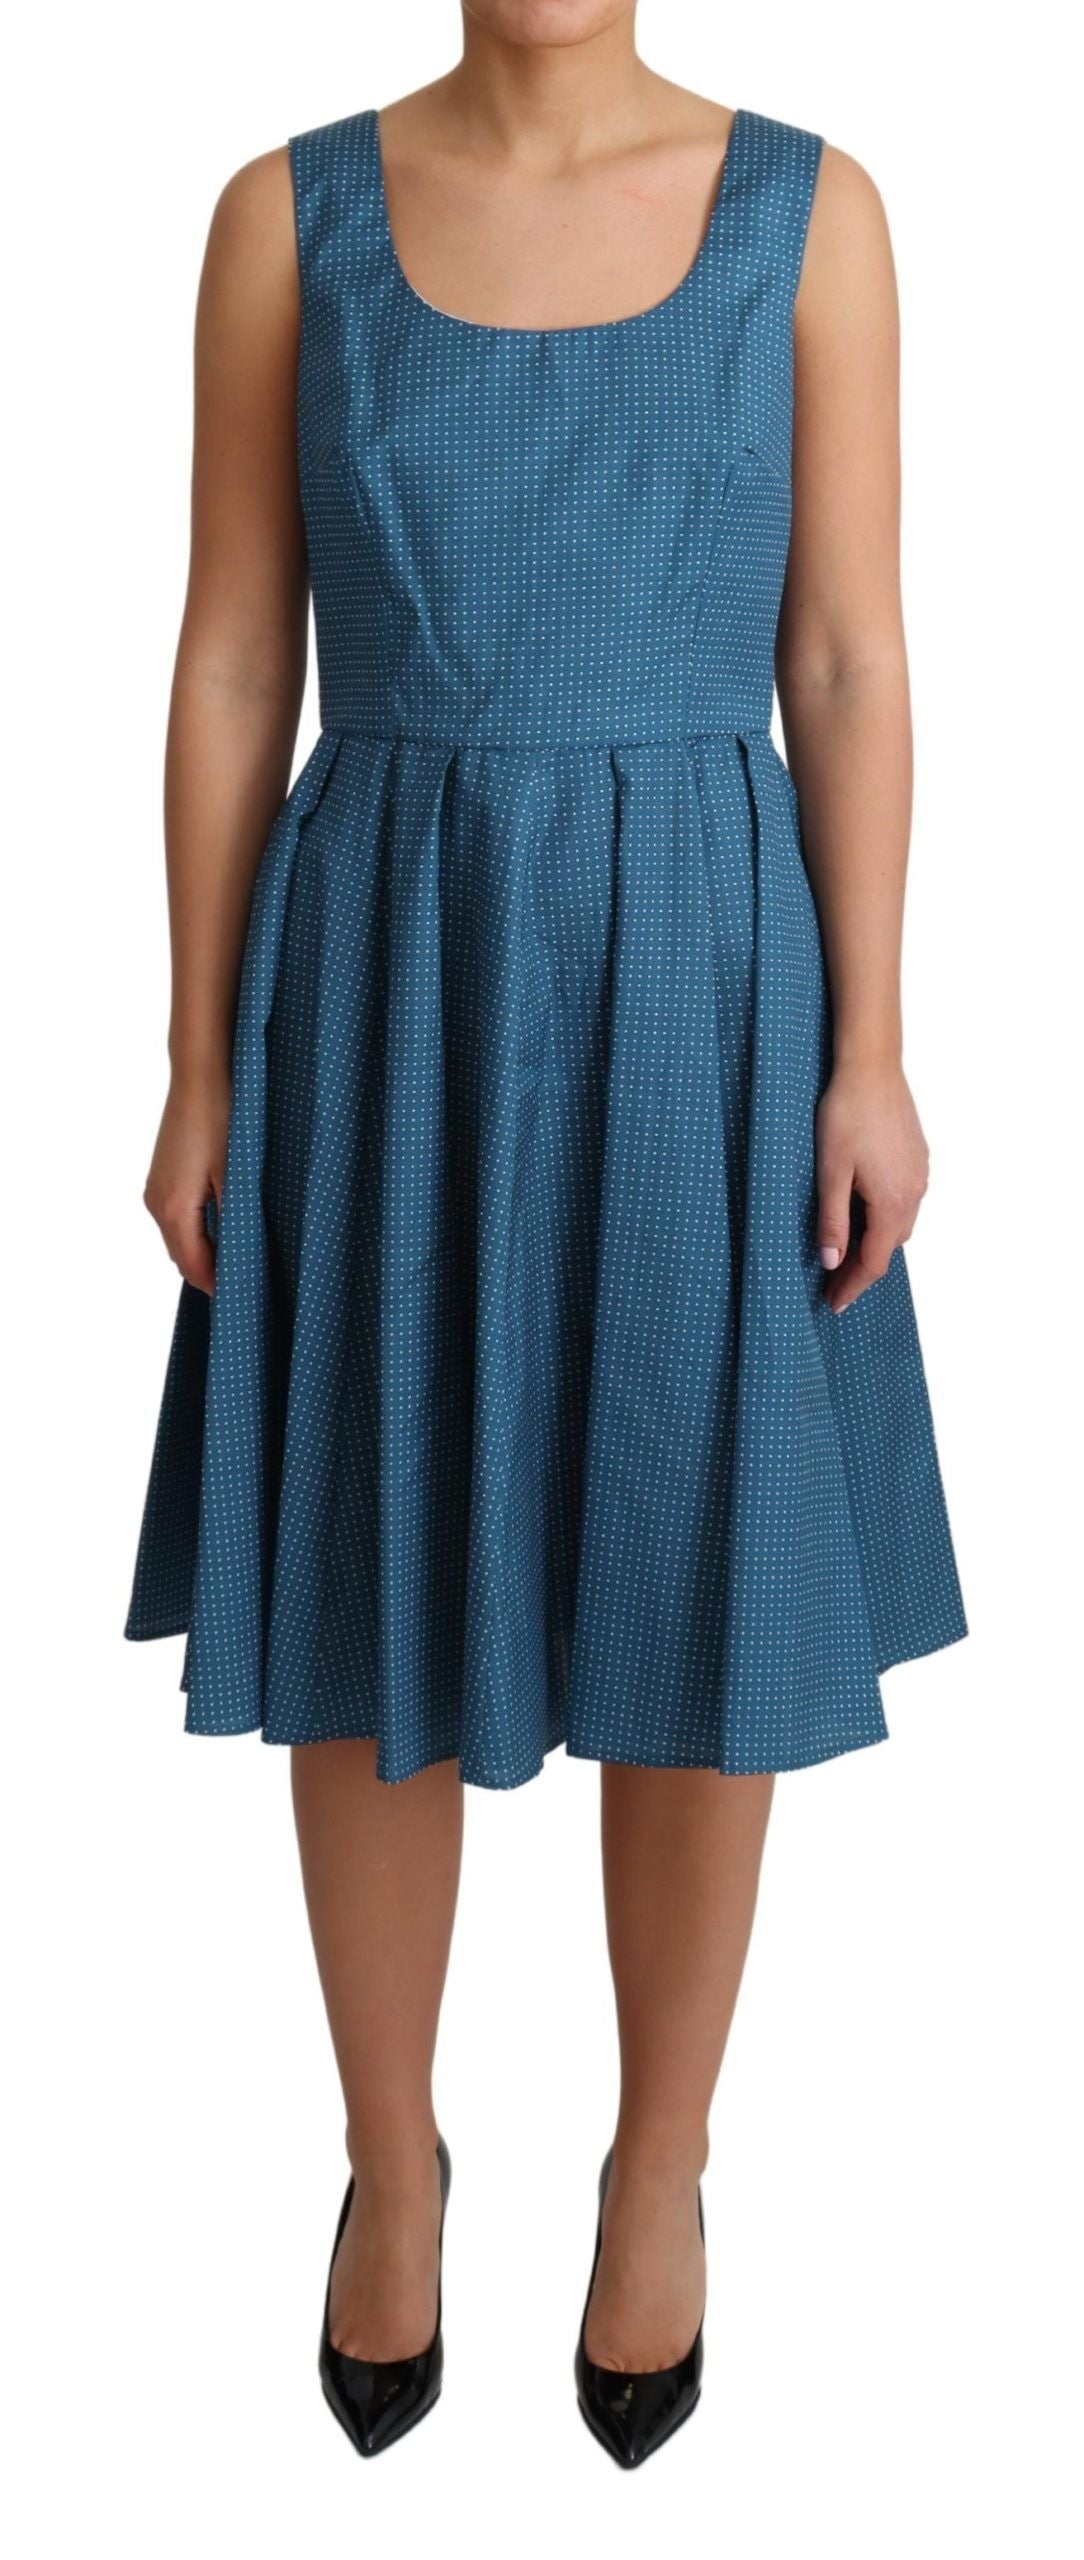 Blue Polka Dotted Sleeveless A-Line Dress